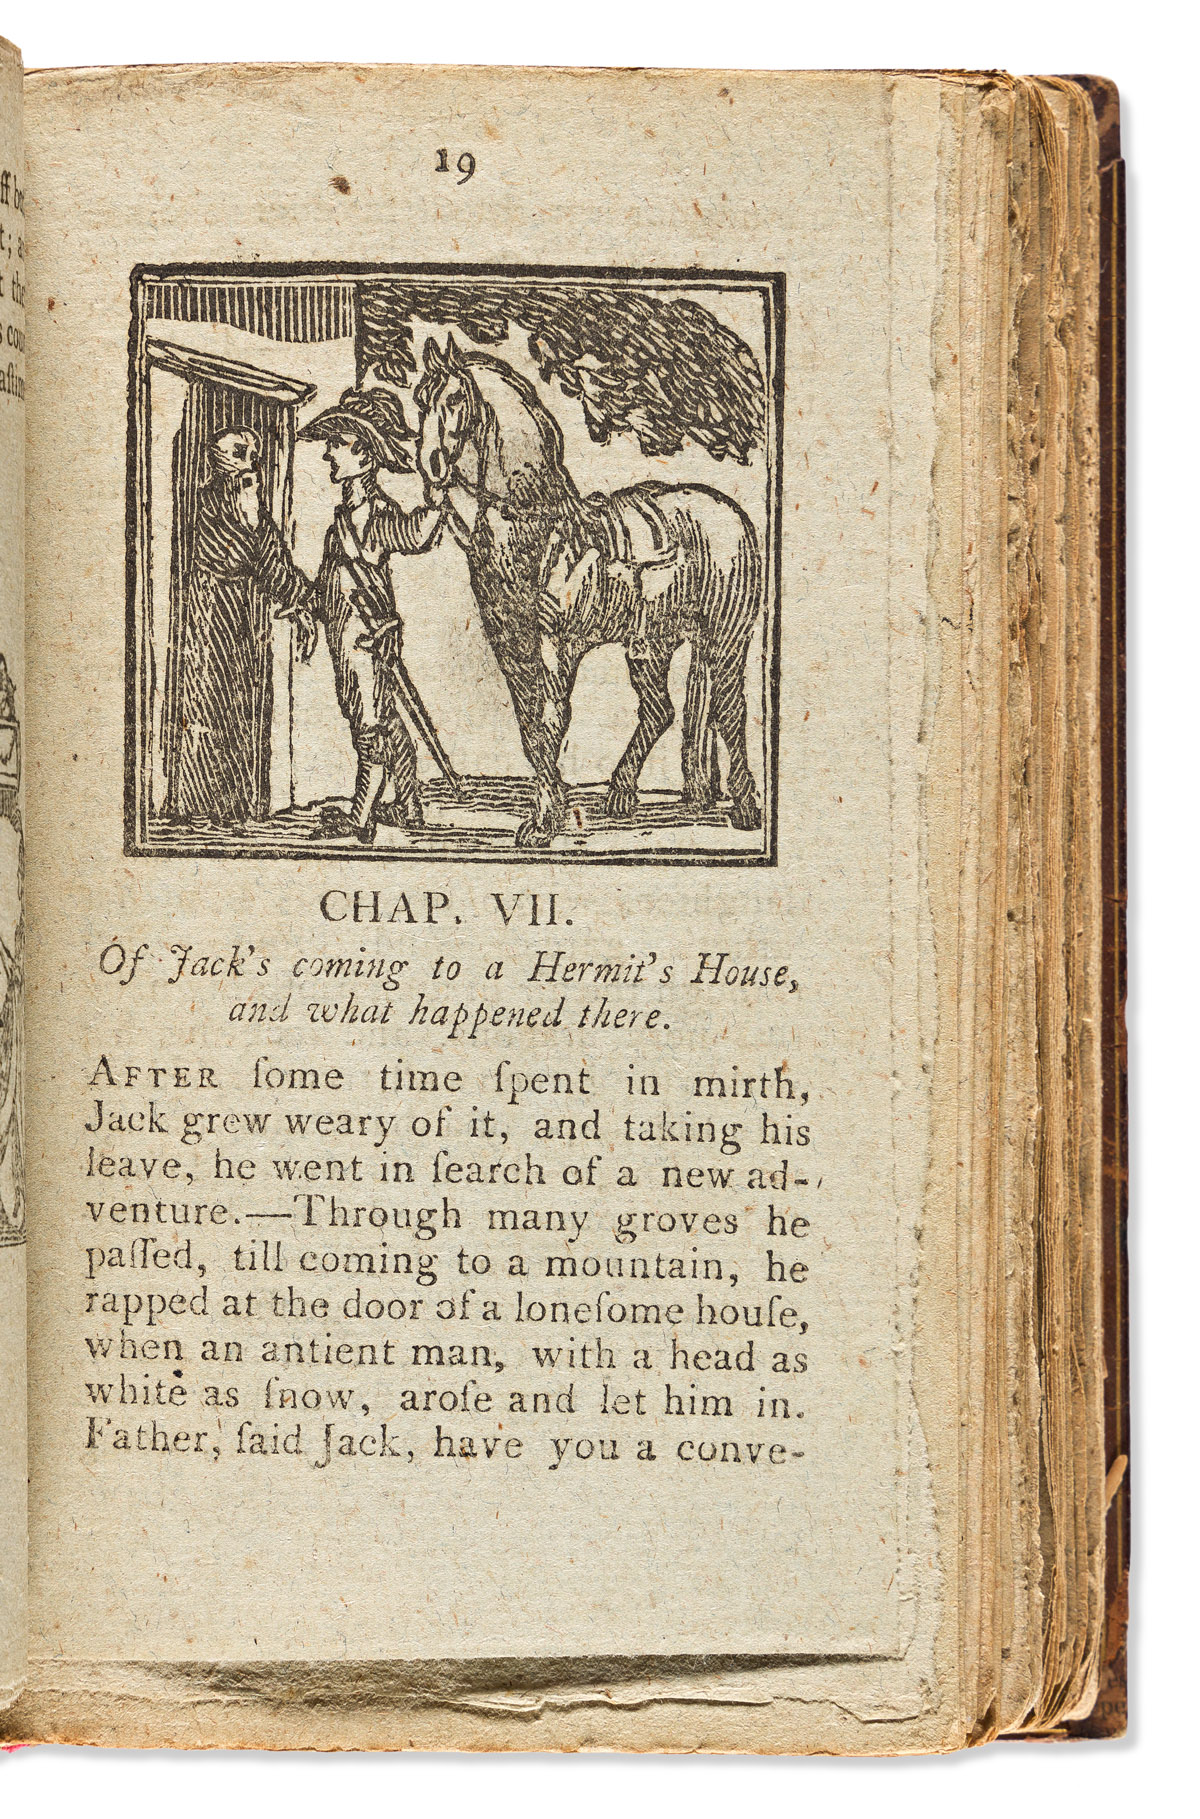 Sammelband of English Chapbooks, Sixteen Titles Bound Together. 1796-c. 1812.